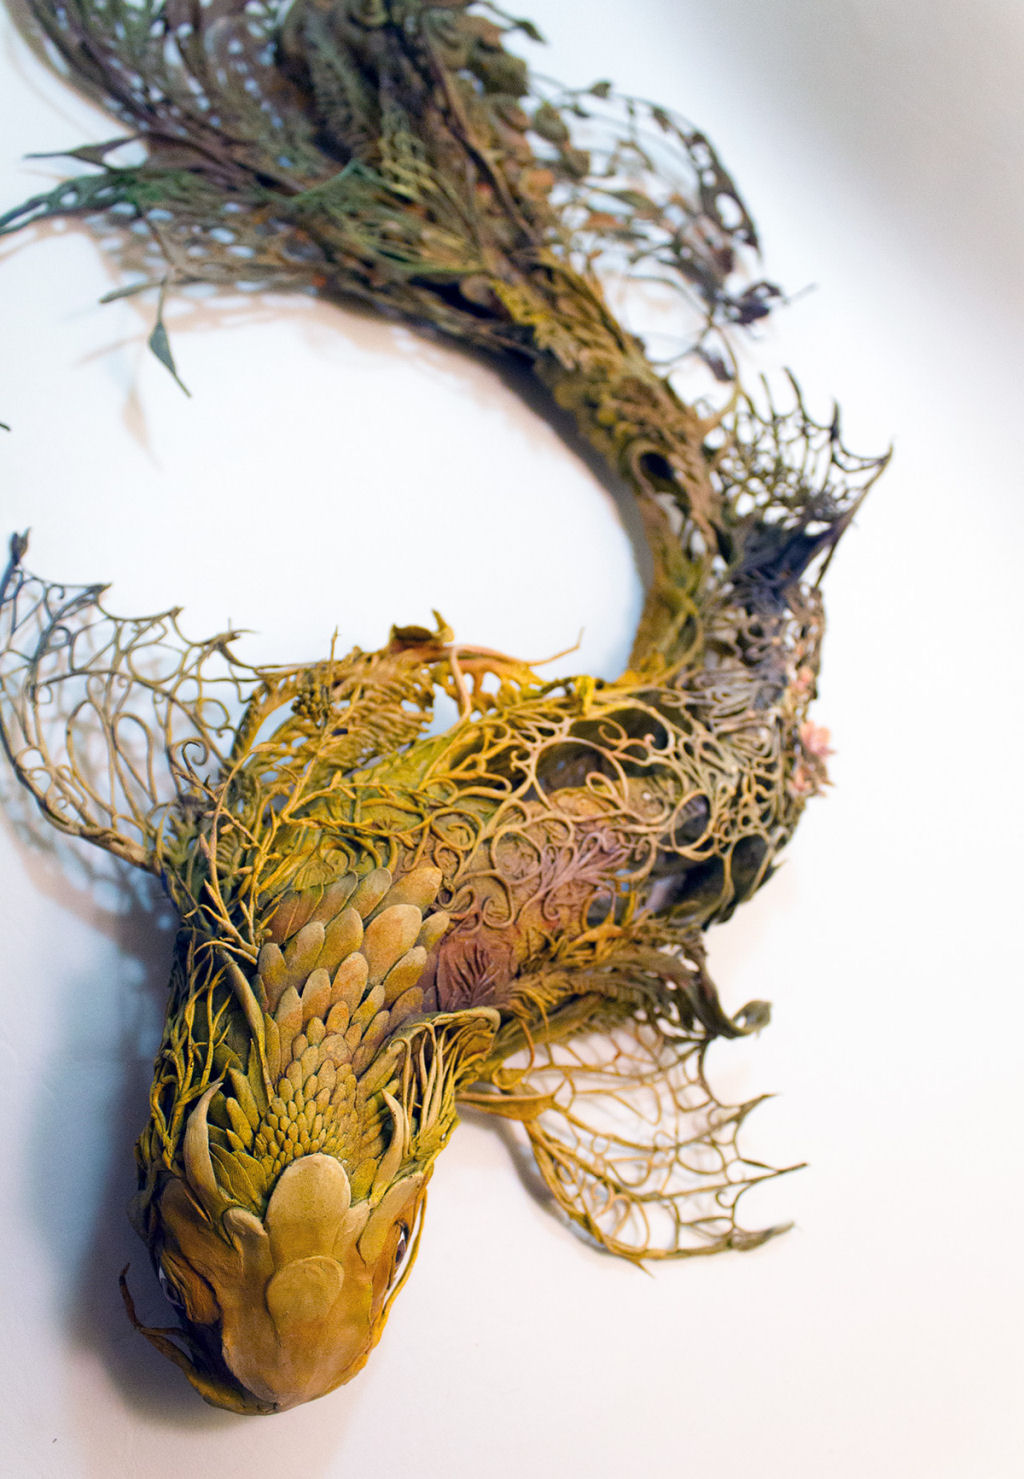 As esculturas surrealistas de Ellen Jewett mesclam plantas e vida animal 04